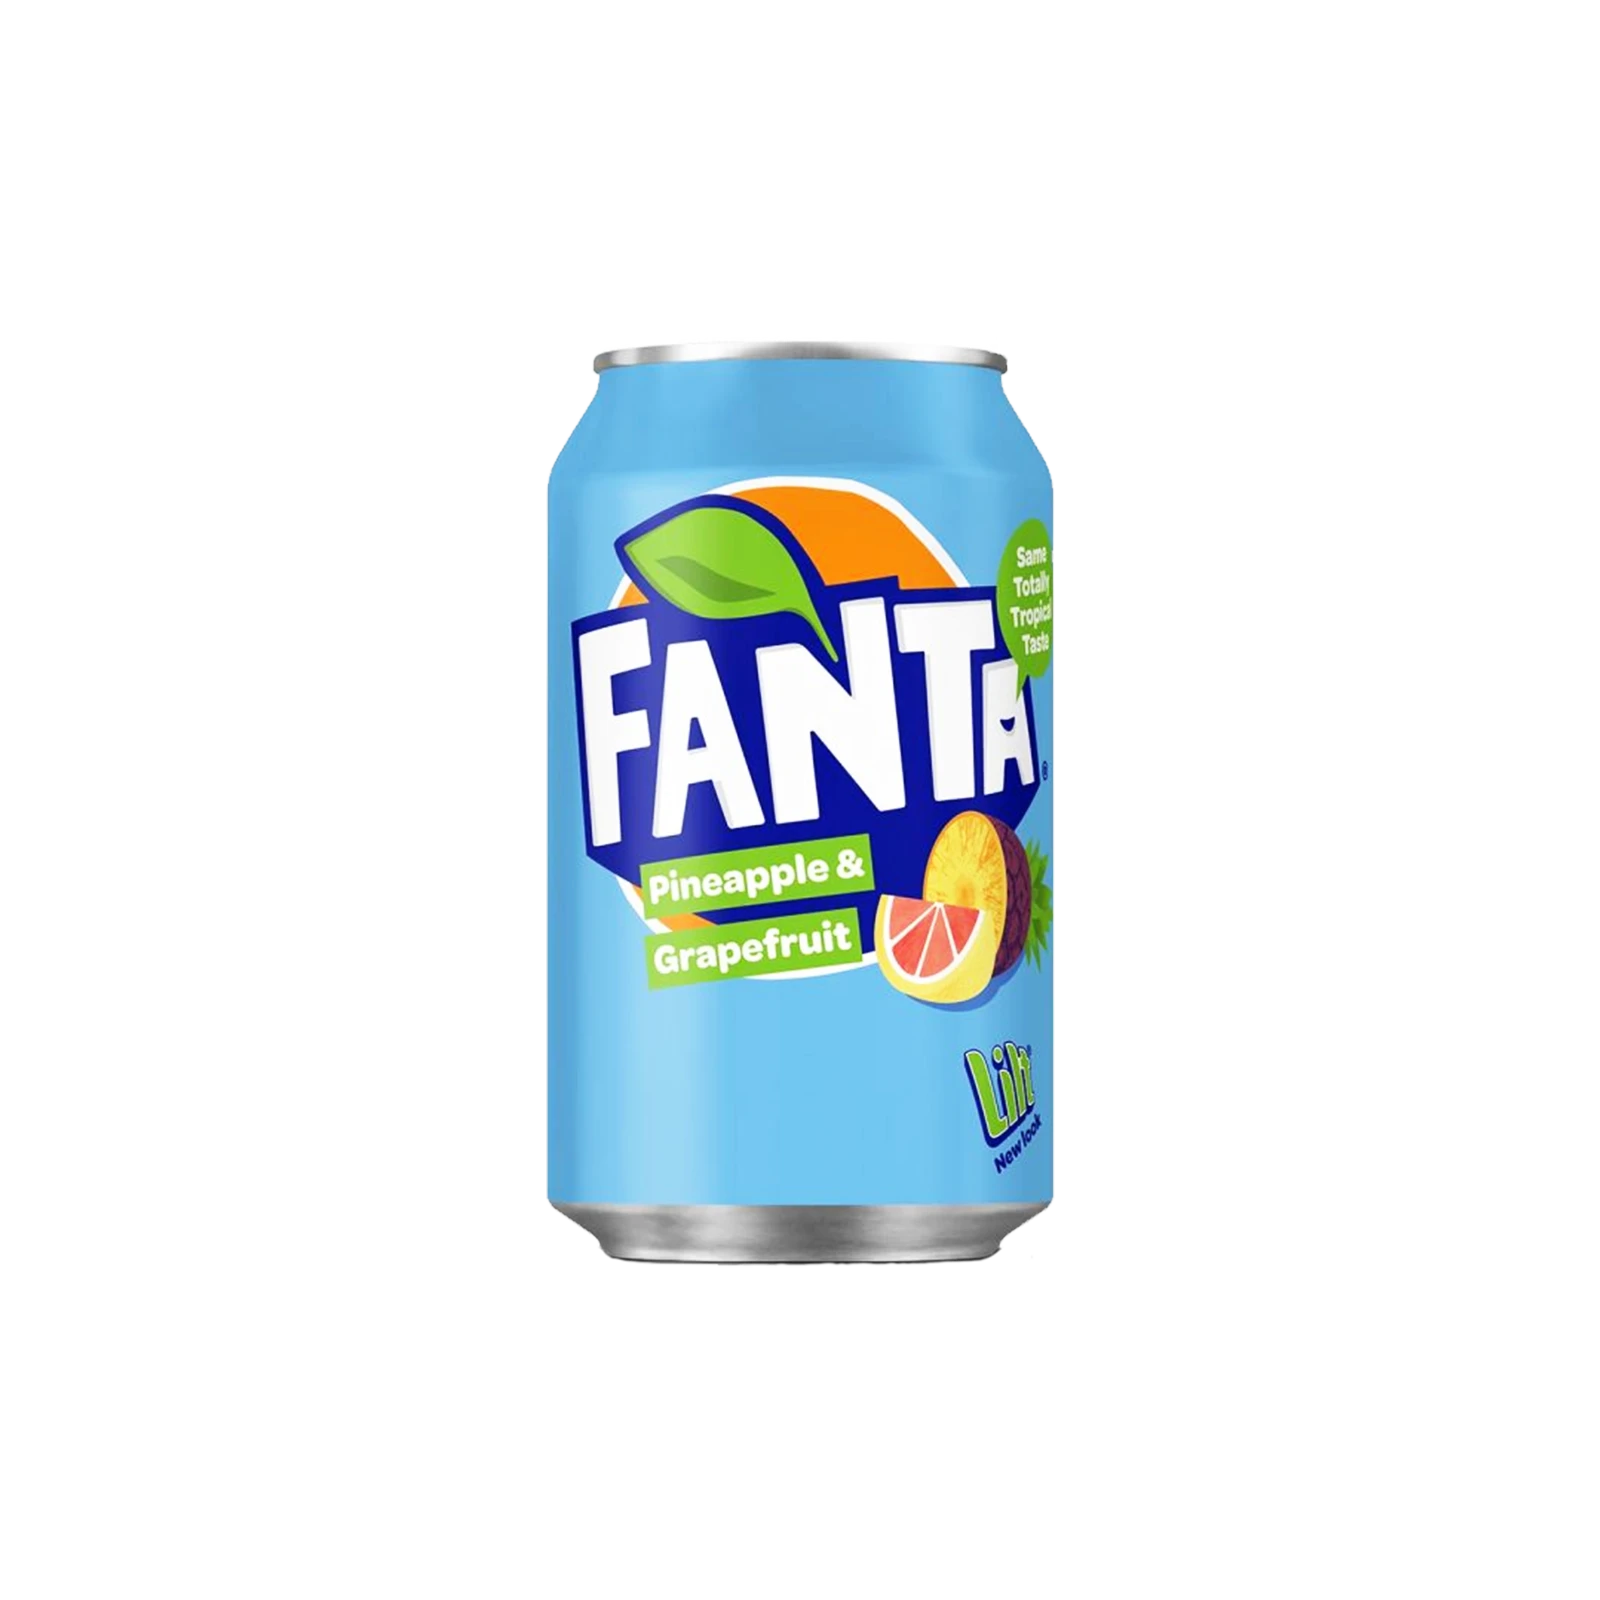 Fanta - Pineapple & Grapefruit - 330 ml | Englische Süßwaren günstig kaufen 1